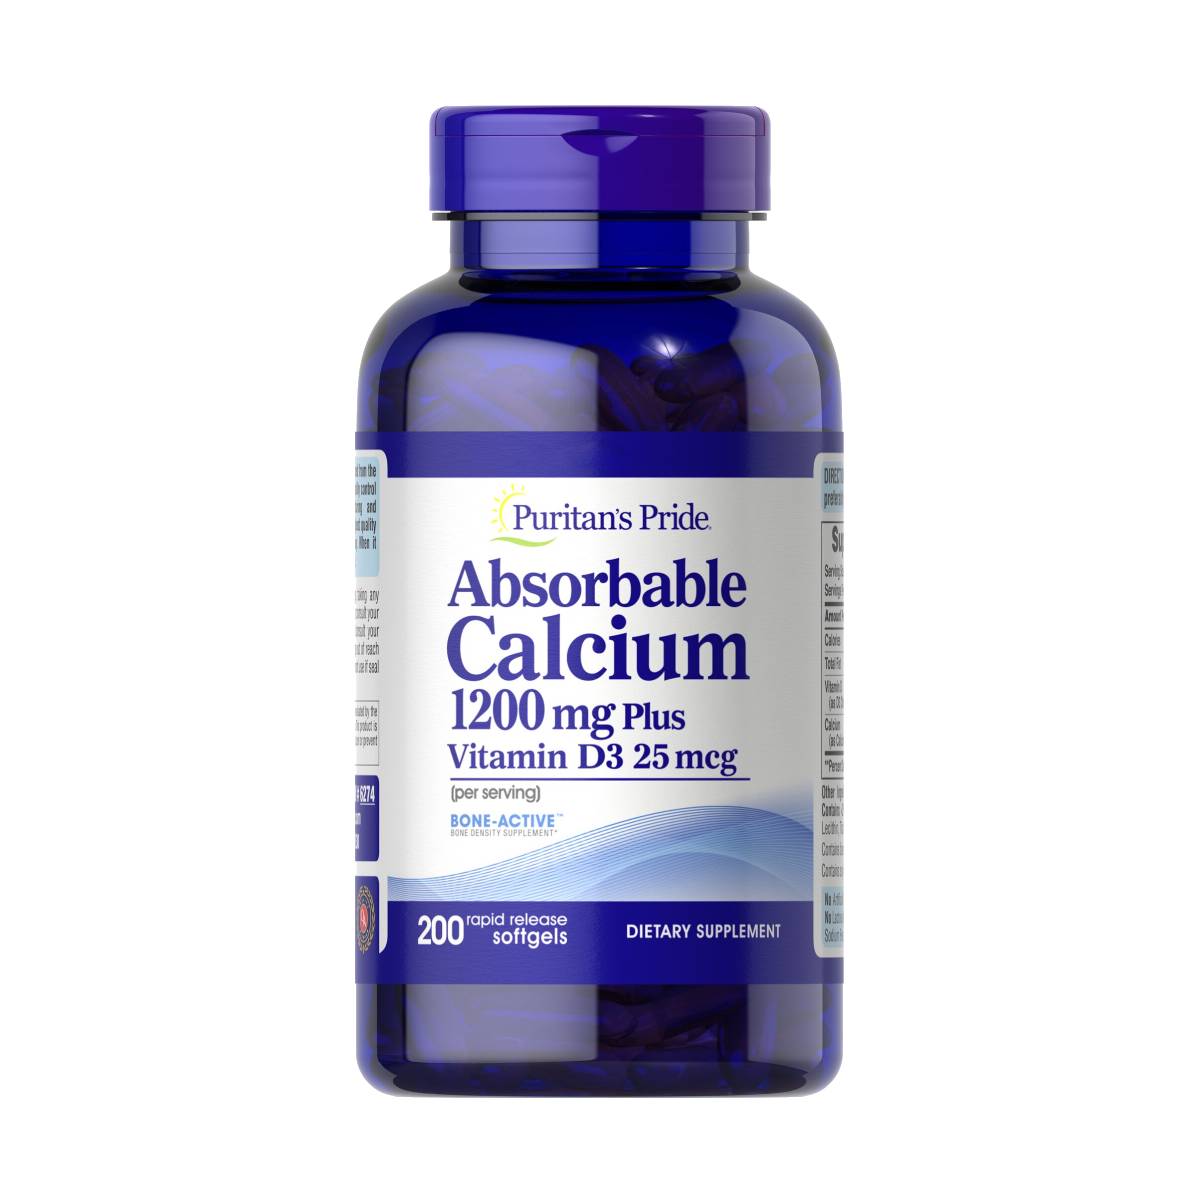 Puritan's Pride, Absorbable Calcium 1200 mg Plus Vitamin D3 25 mcg